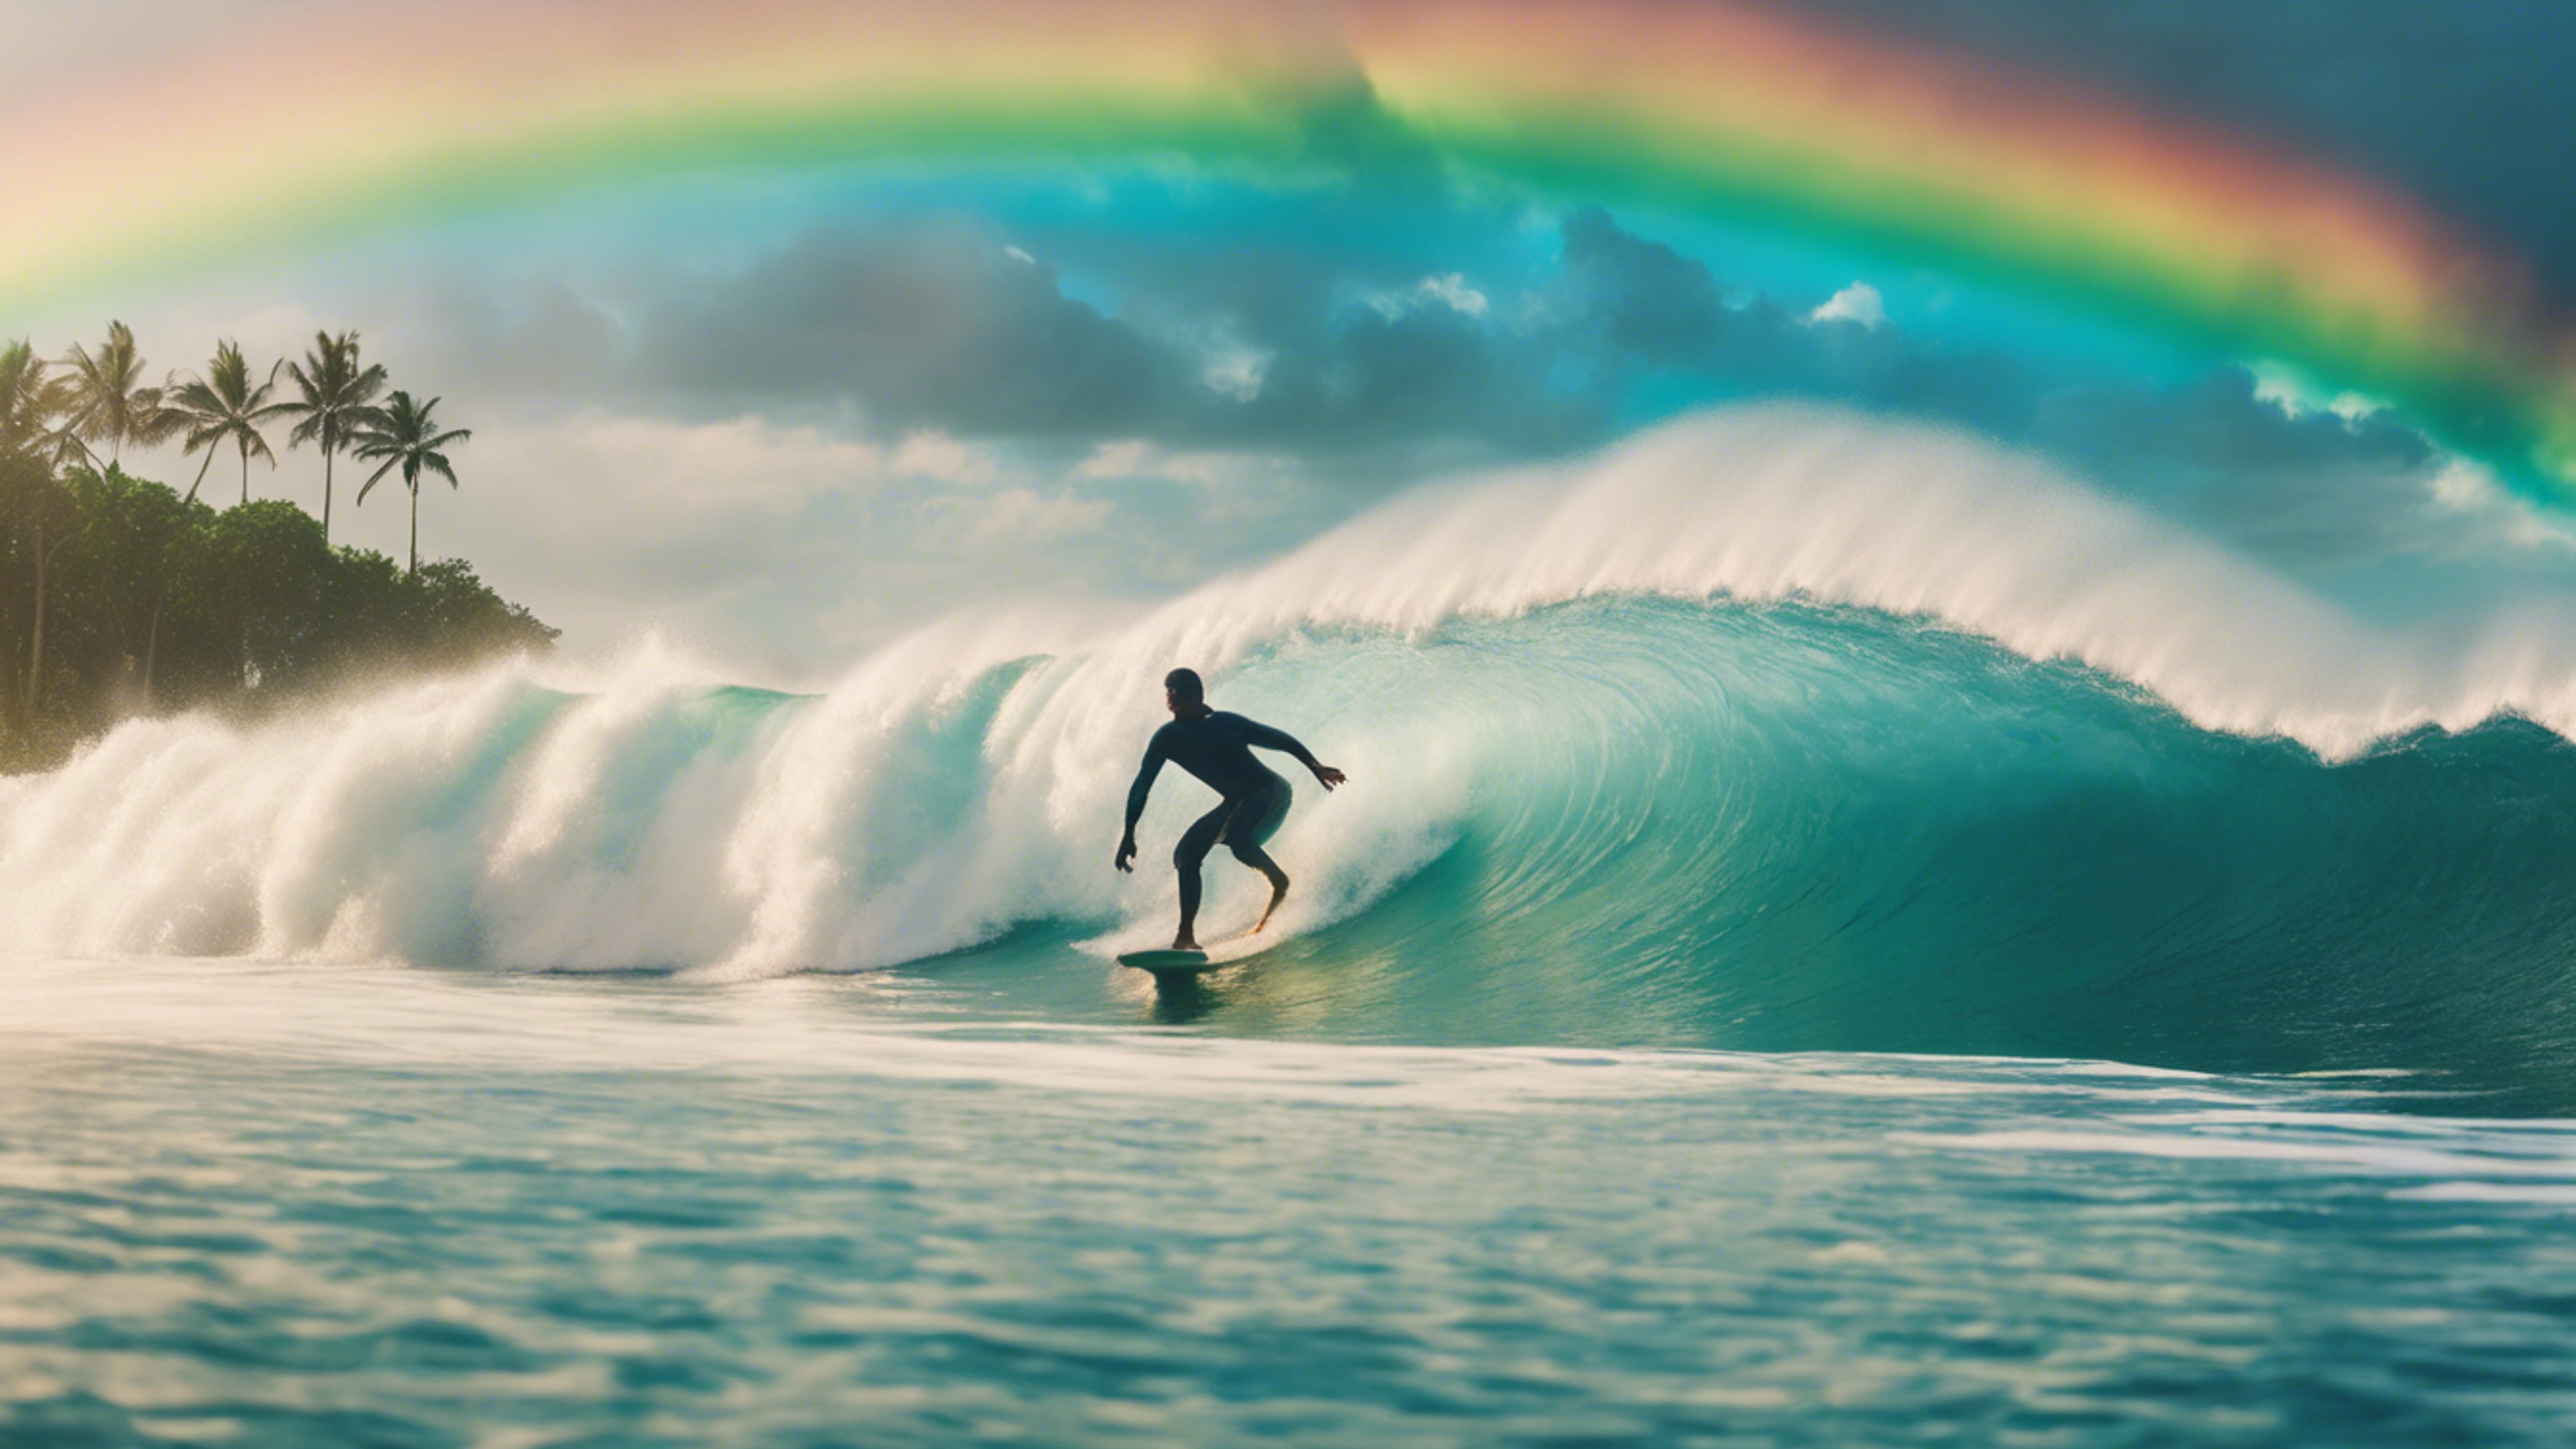 A spontaneous man surfing on a giant wave under a scintillating rainbow in a tropical ocean. Fond d'écran[41deec9b24da40d39c6d]